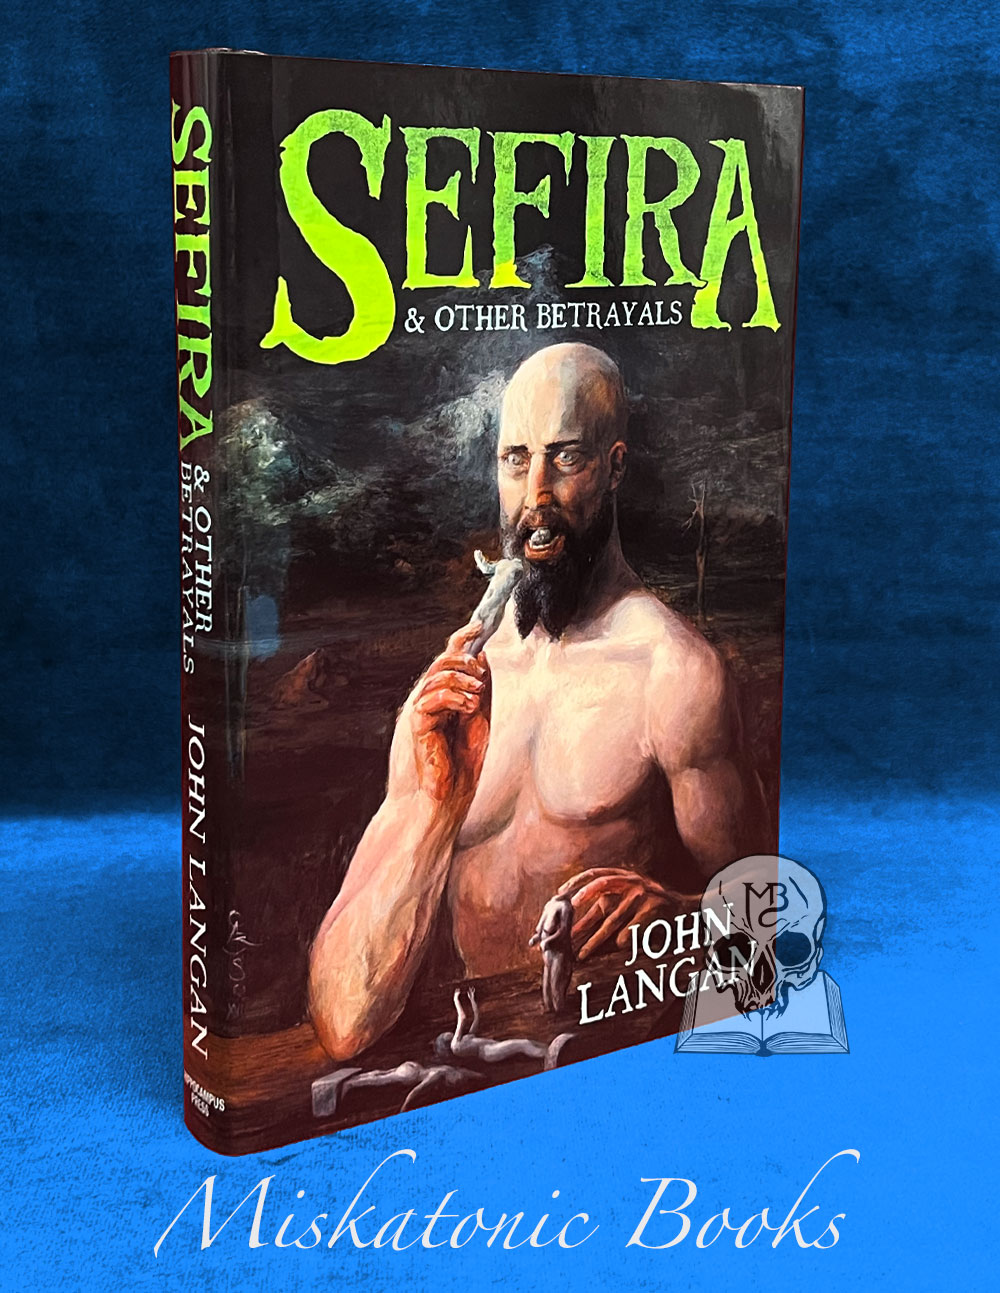 Sefira and Other Betrayals by John Langan - Limited Edition Hardcover